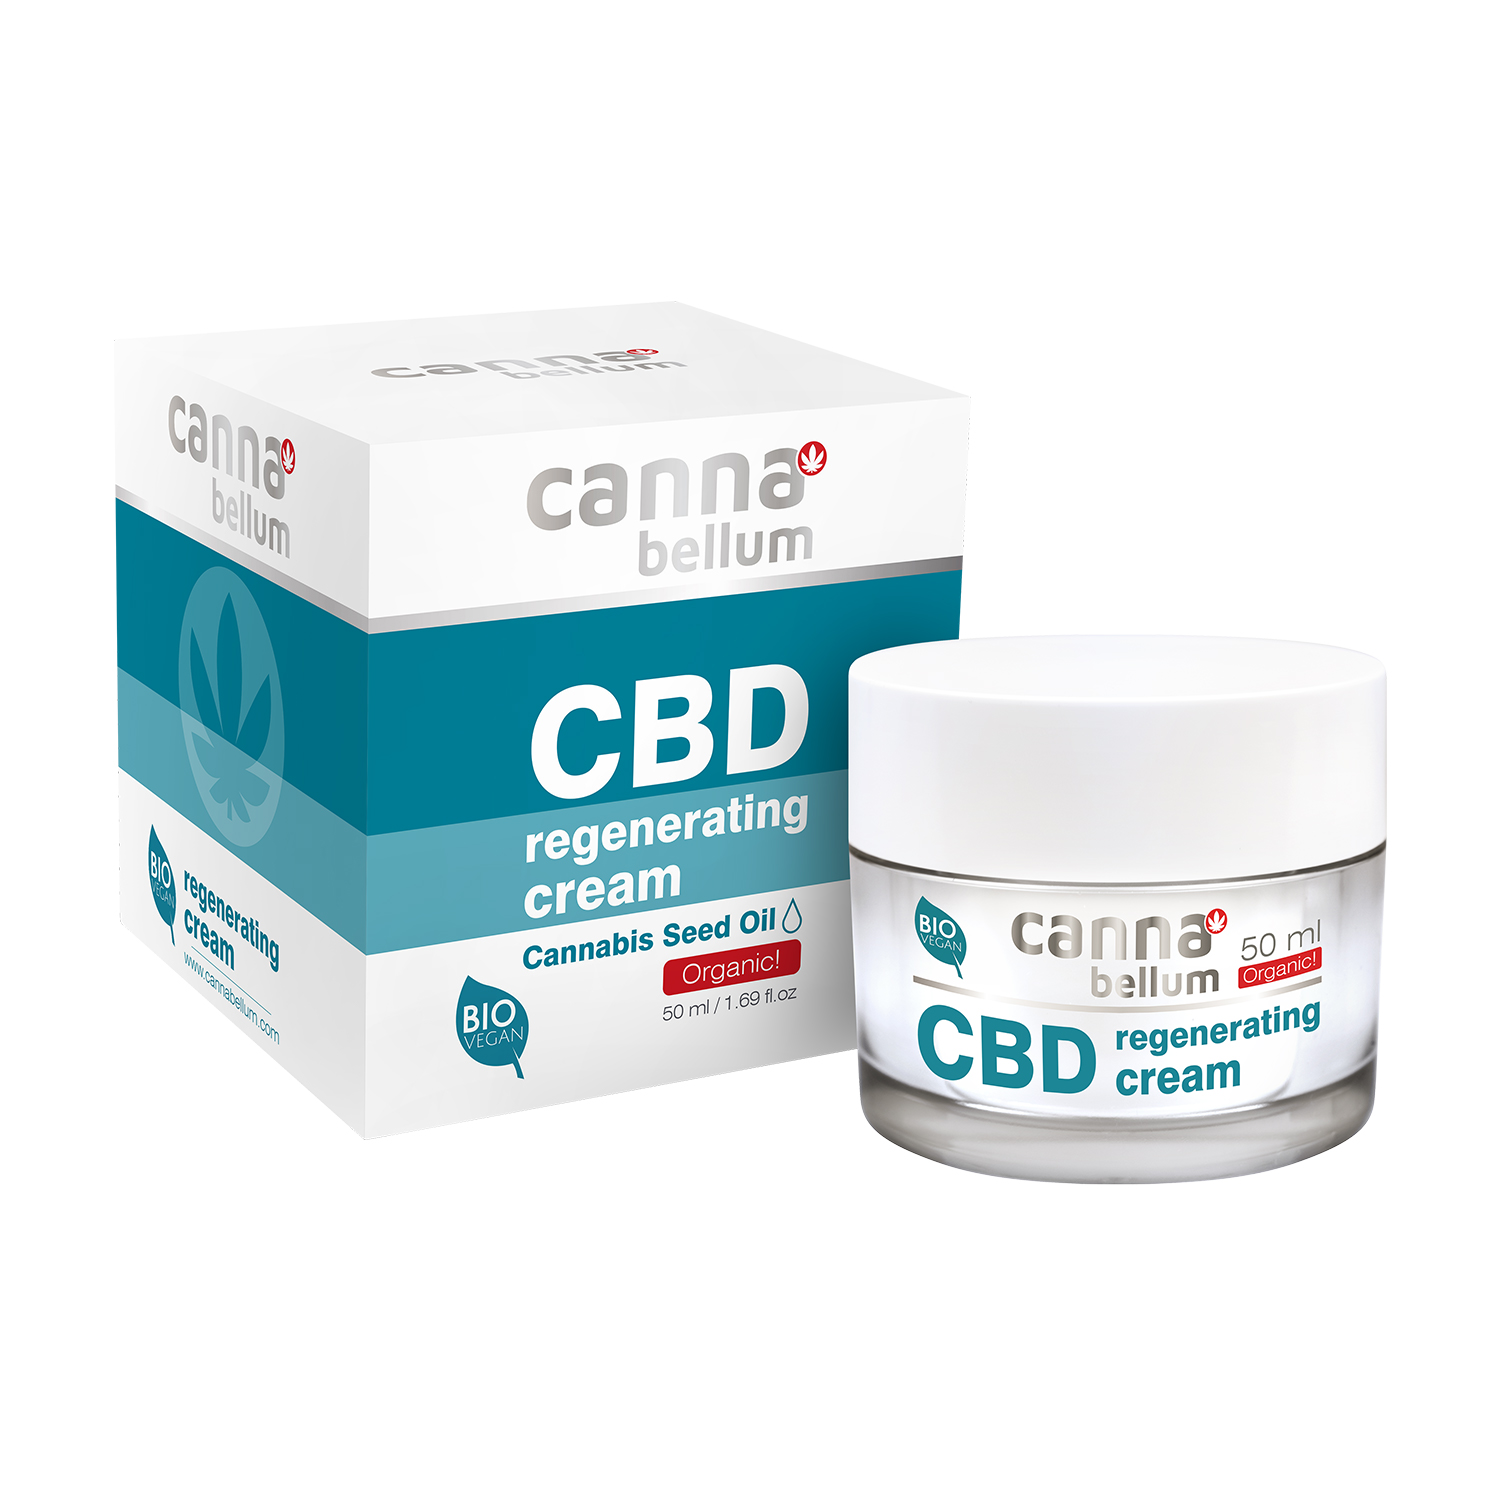 Cannabellum CBD regenerating cream 50ml P1253 komplet WEB 36